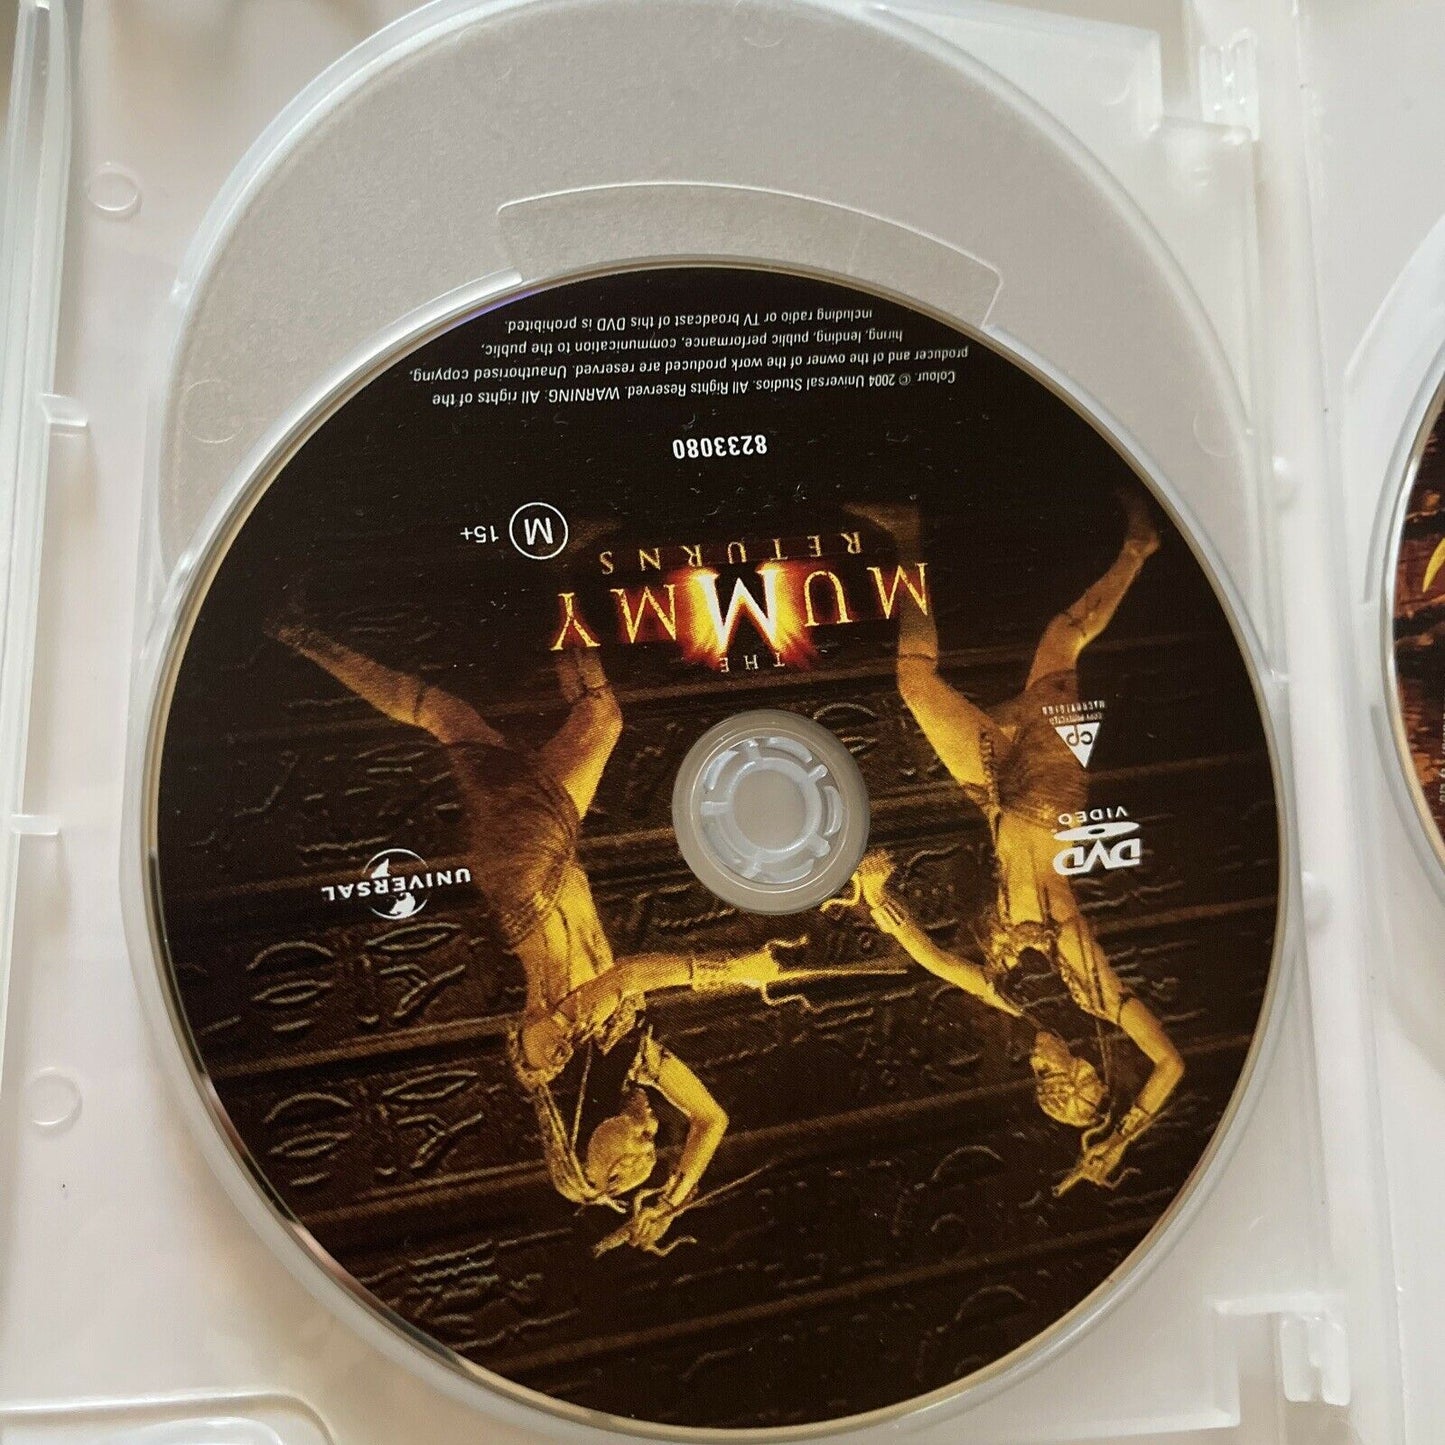 The Mummy / The Mummy Returns / The Scorpion King (DVD, 2002, 3-Disc) Region 4